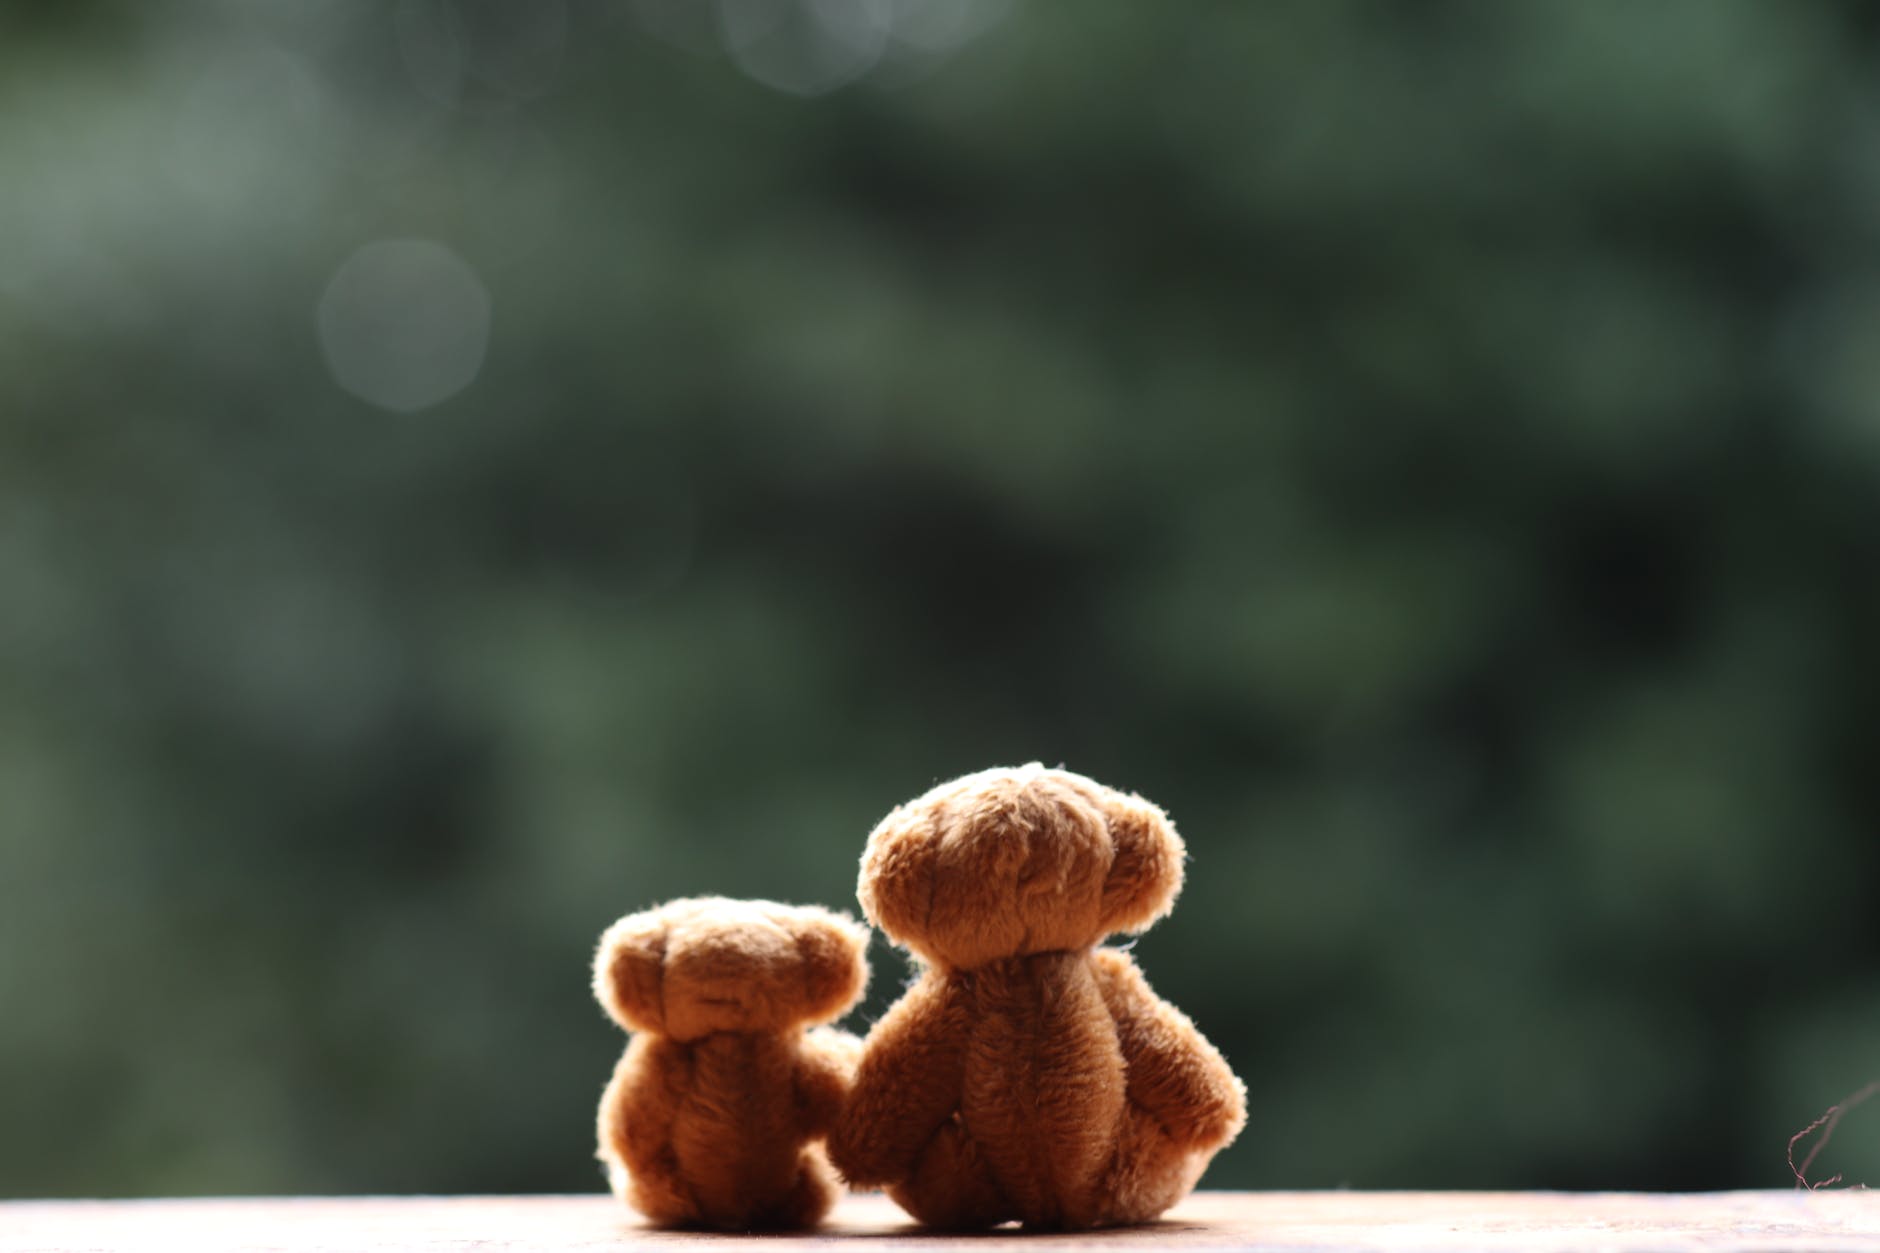 two brown teddy bears